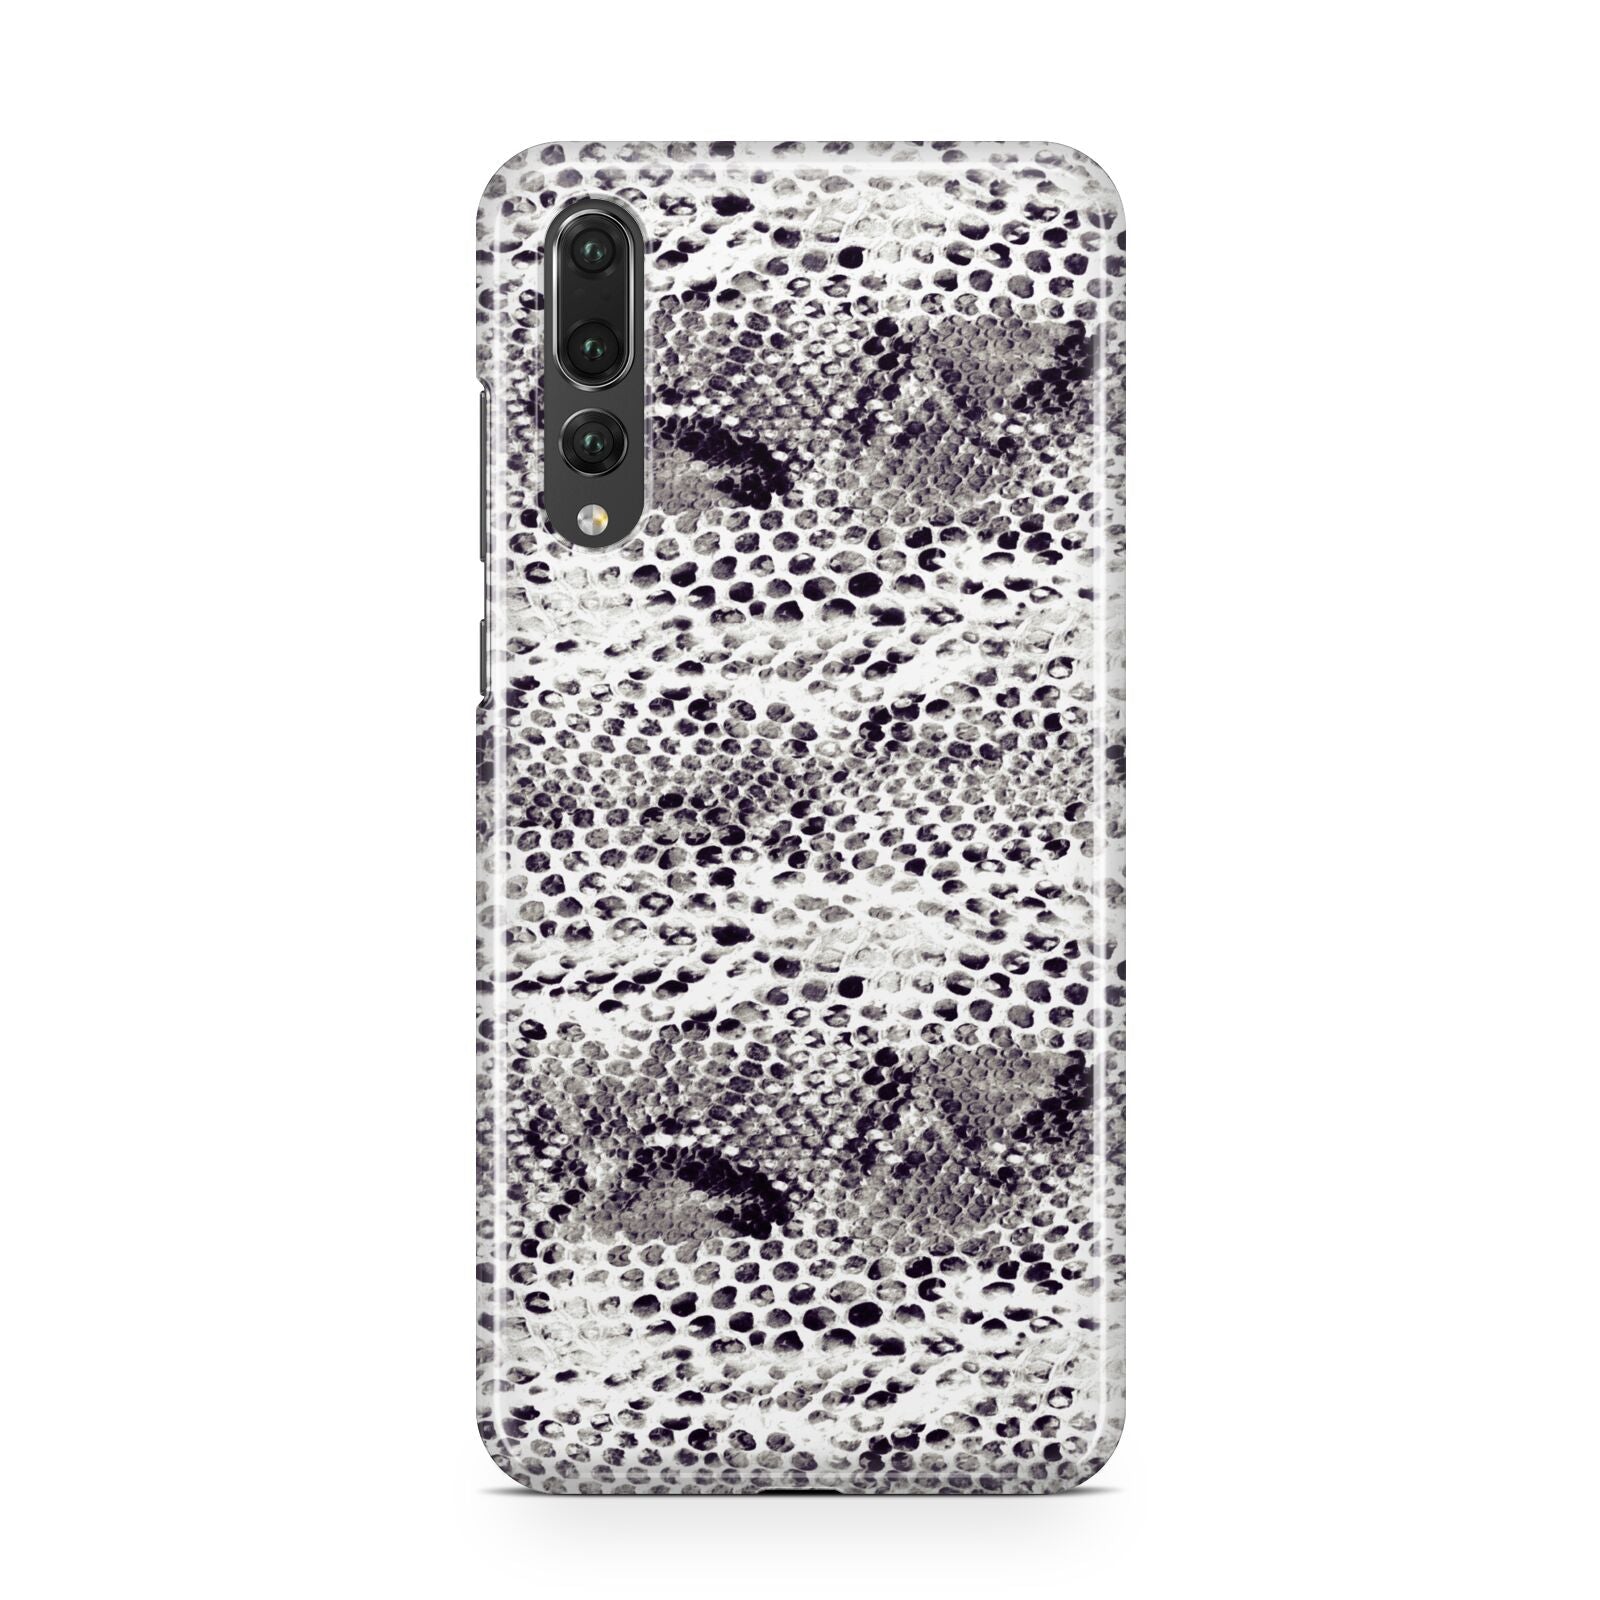 Textured Snakeskin Huawei P20 Pro Phone Case